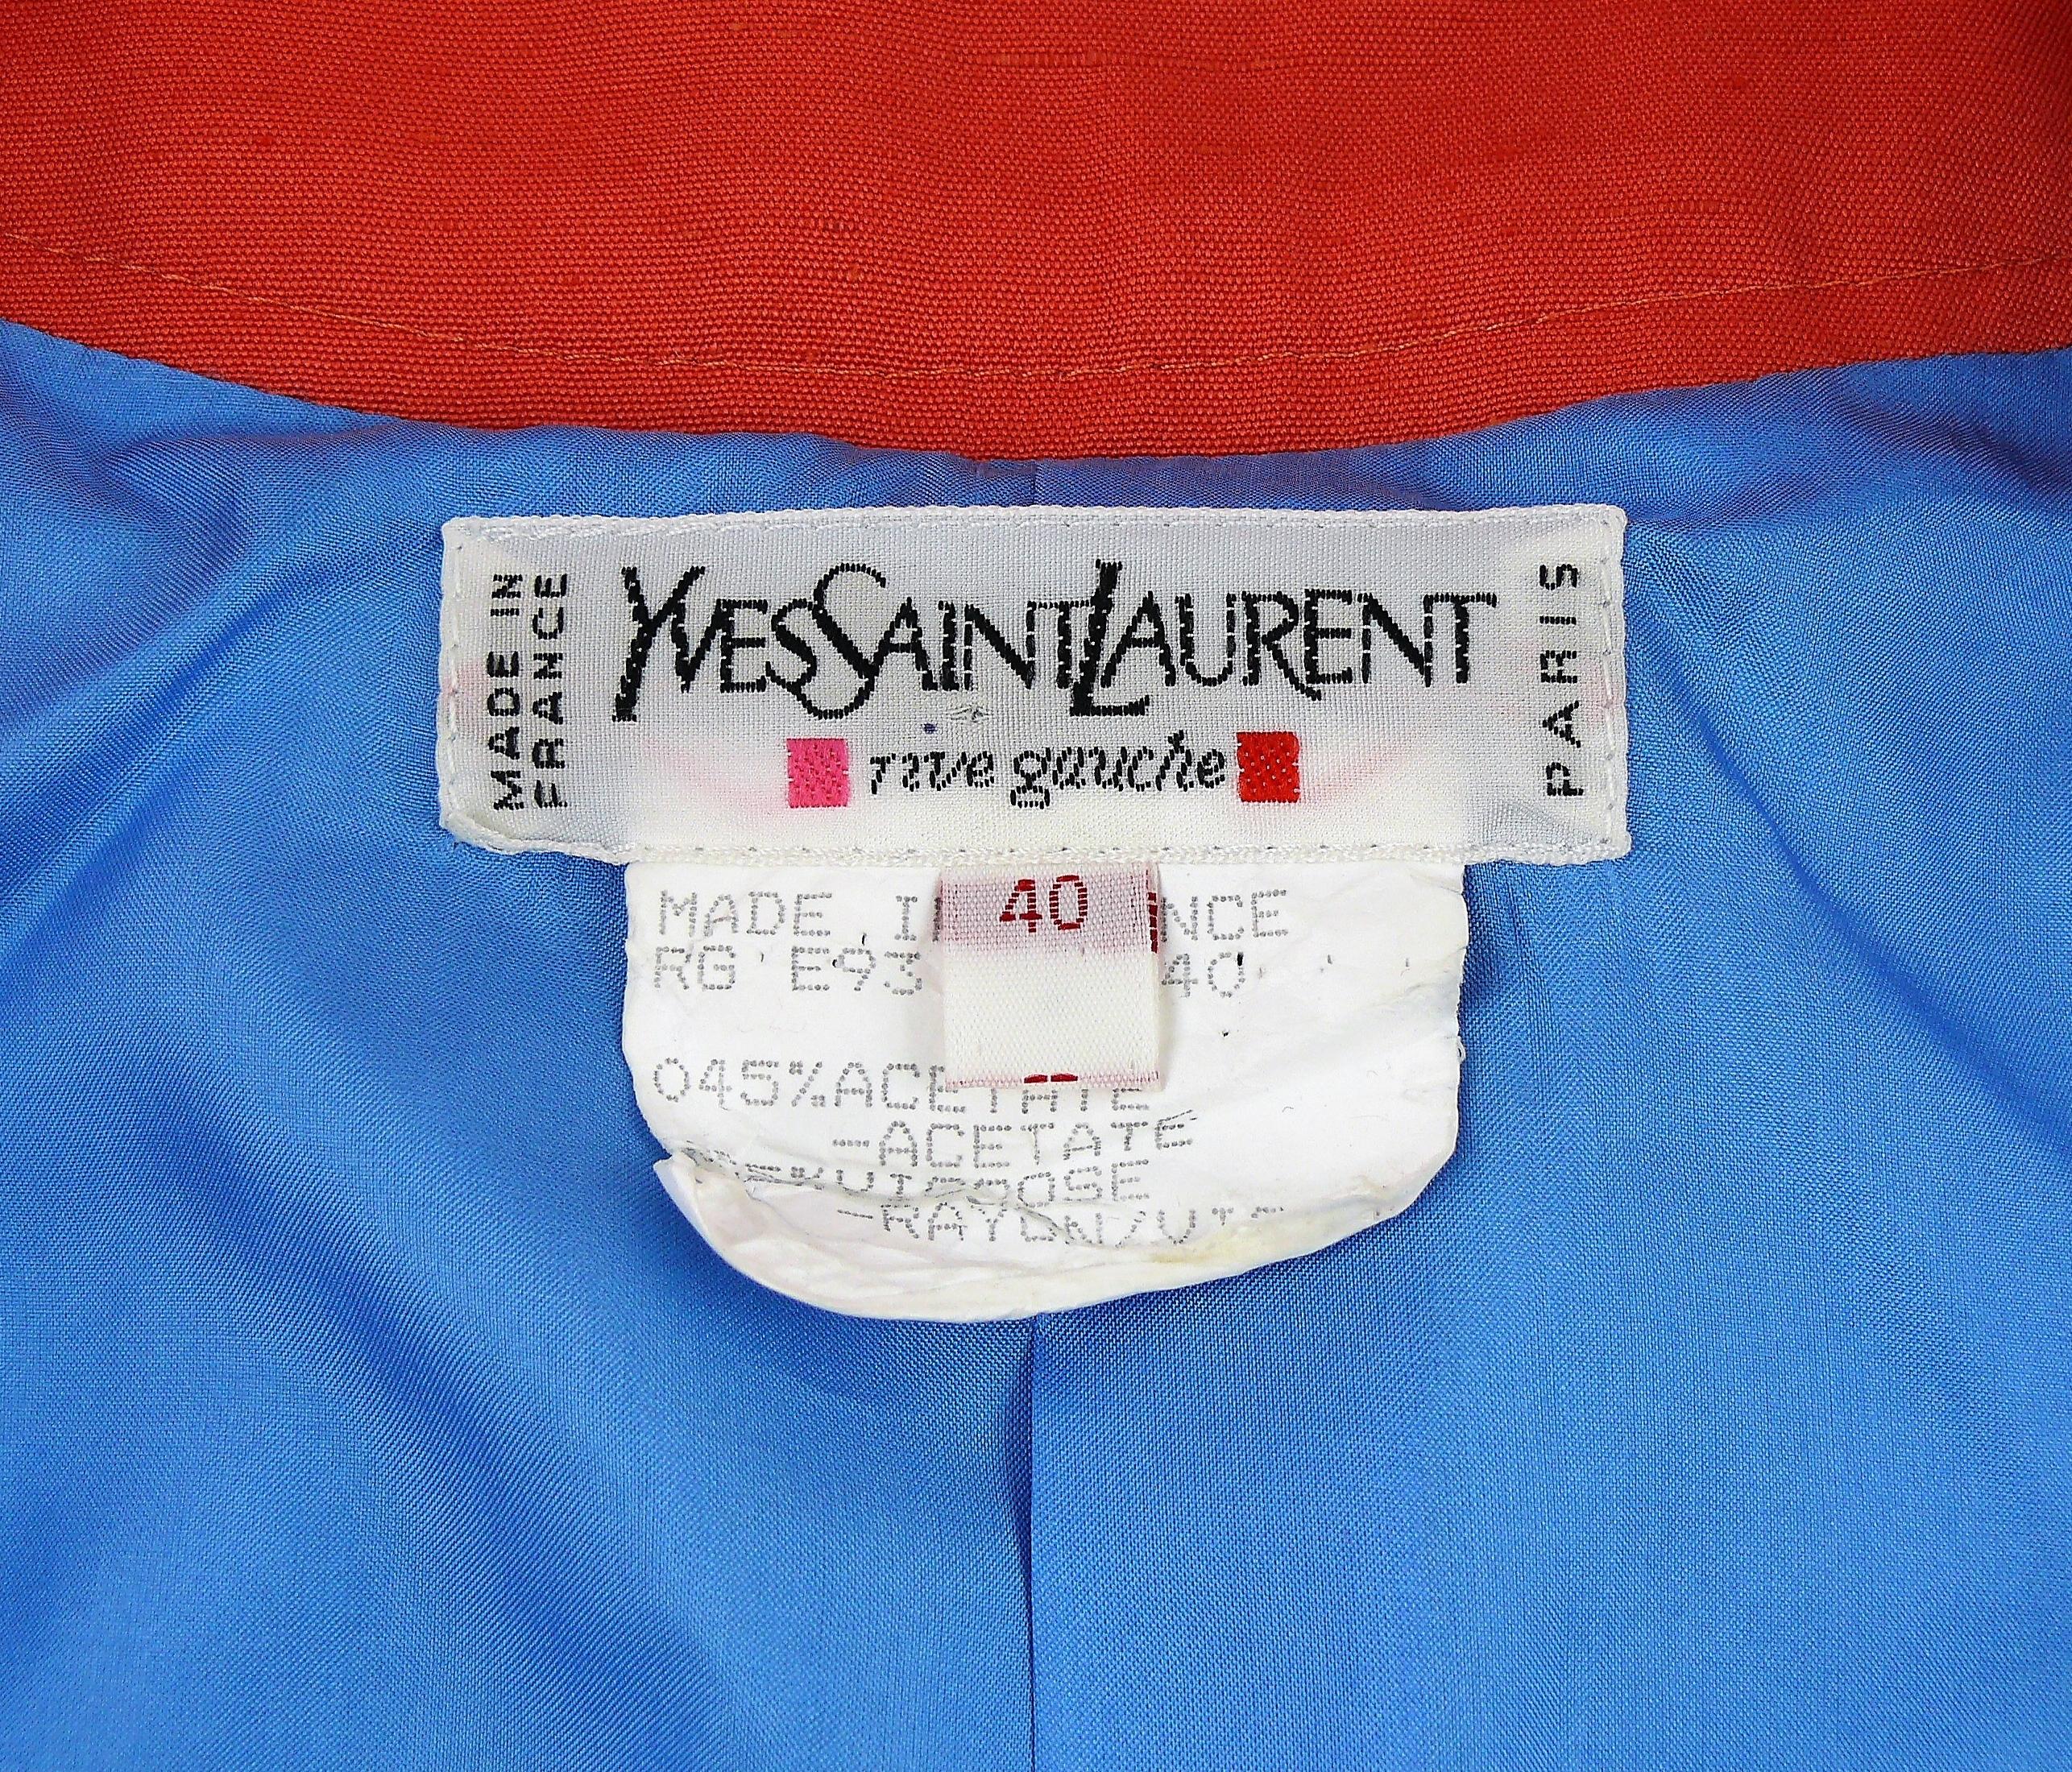 Yves Saint Laurent YSL Oriental Inspired Jacket and Skirt Ensemble For Sale 7